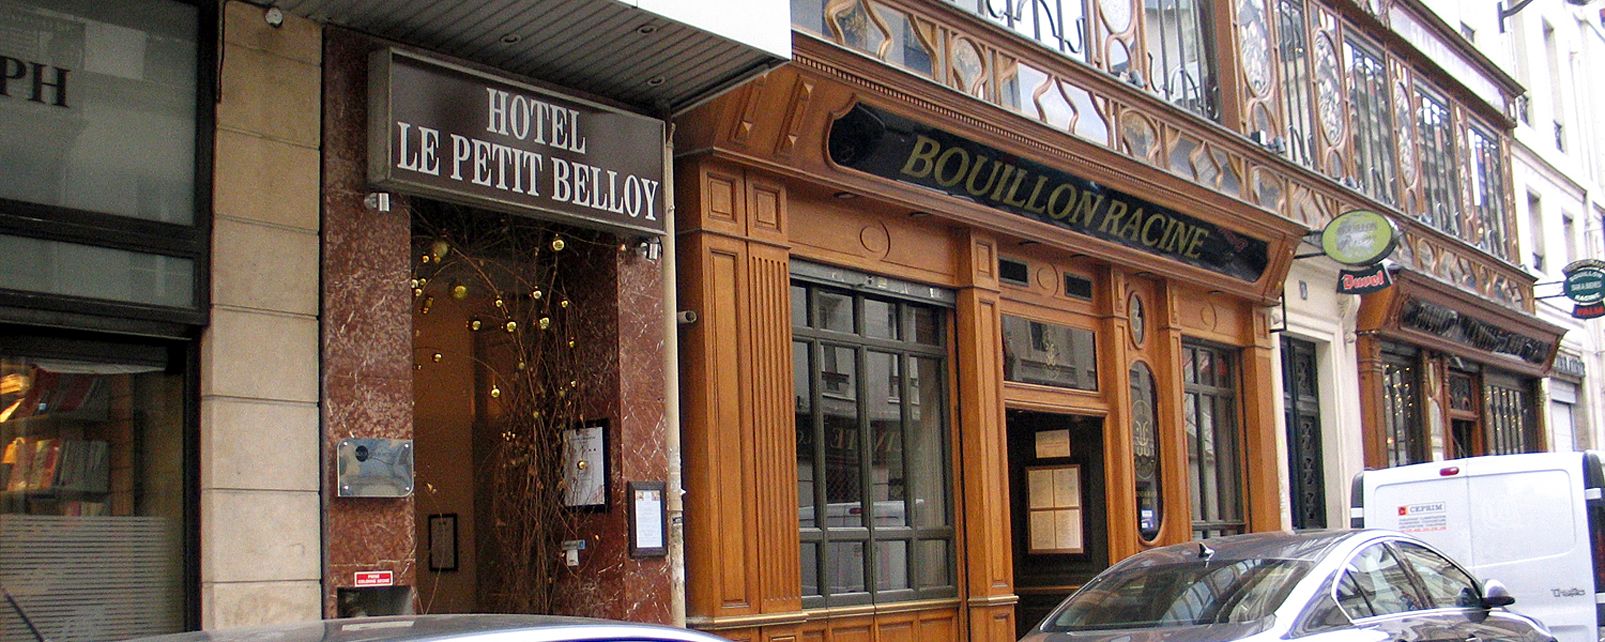 Hotel Le Petit Belloy St Germain